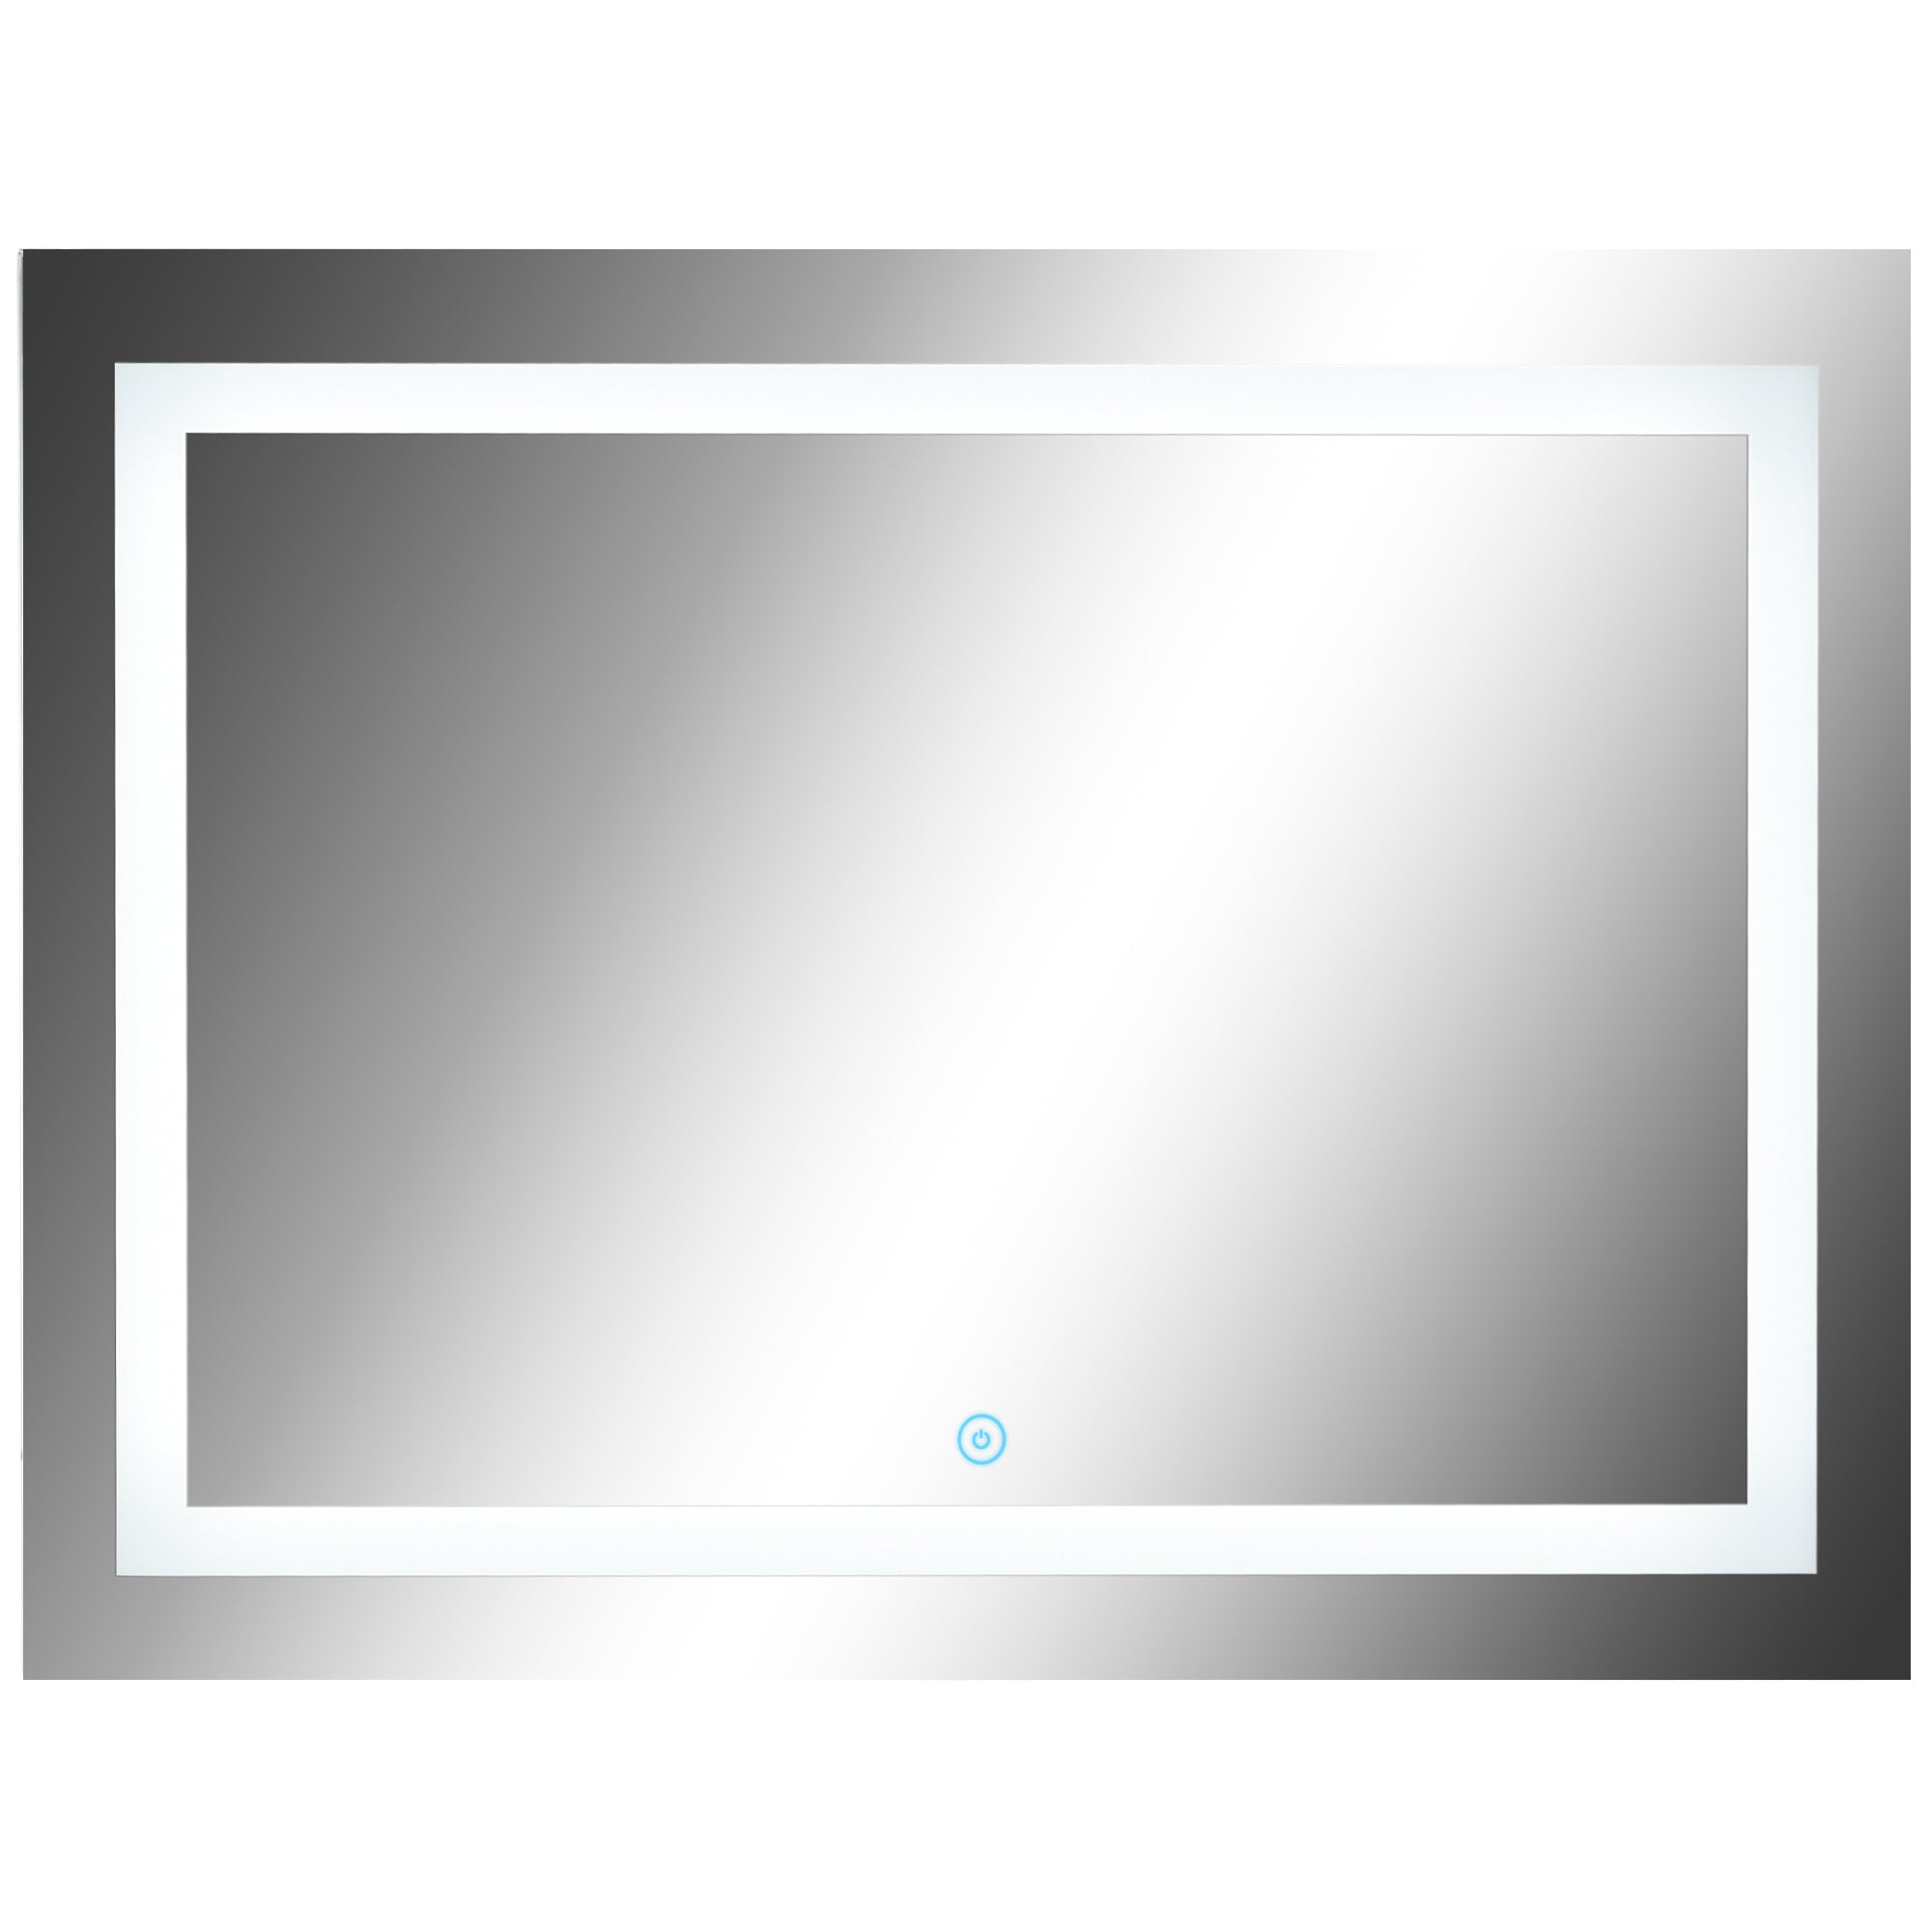 Nancy's Gilroy Badkamerspiegel - Spiegel - Wandspiegel - LED - Glas - Aluminium - Horizontaal - Verticaal - 60 x 80 x 4 cm